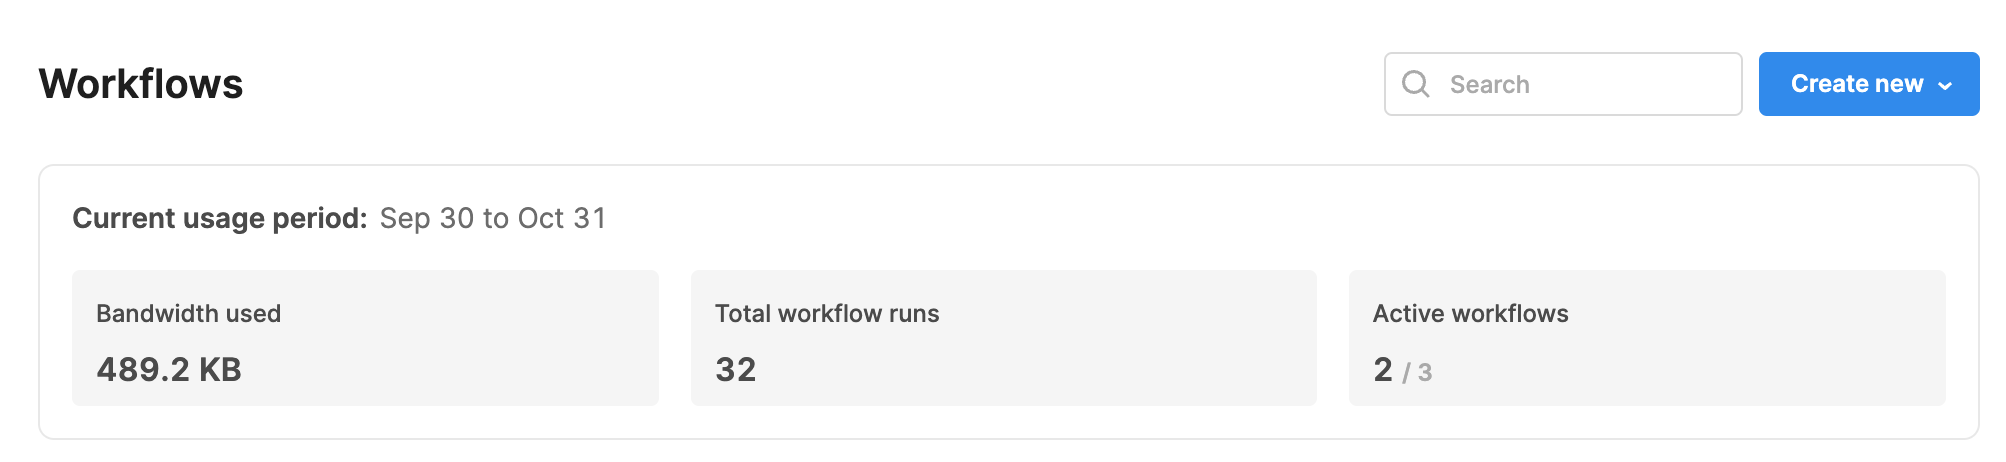 Workflows usage example